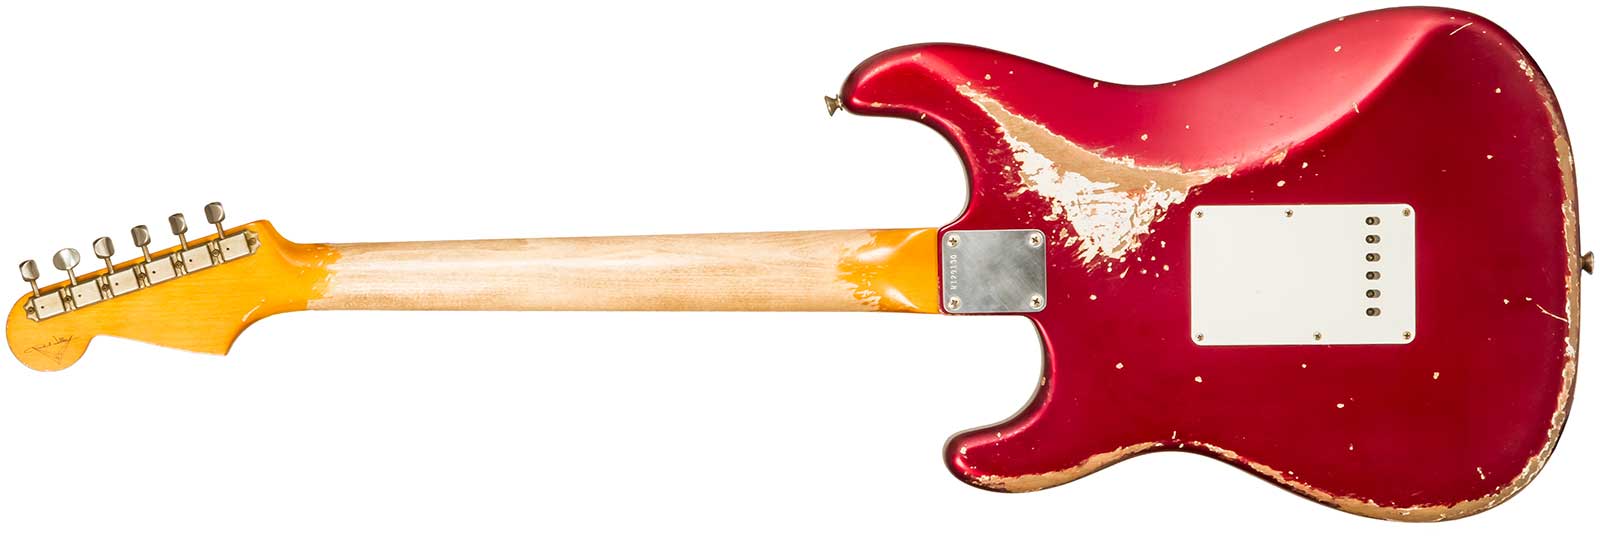 Fender Custom Shop Strat 1964 Masterbuilt P.waller 3s Trem Rw #r129130 - Heavy Relic Candy Apple Red - Str shape electric guitar - Variation 1